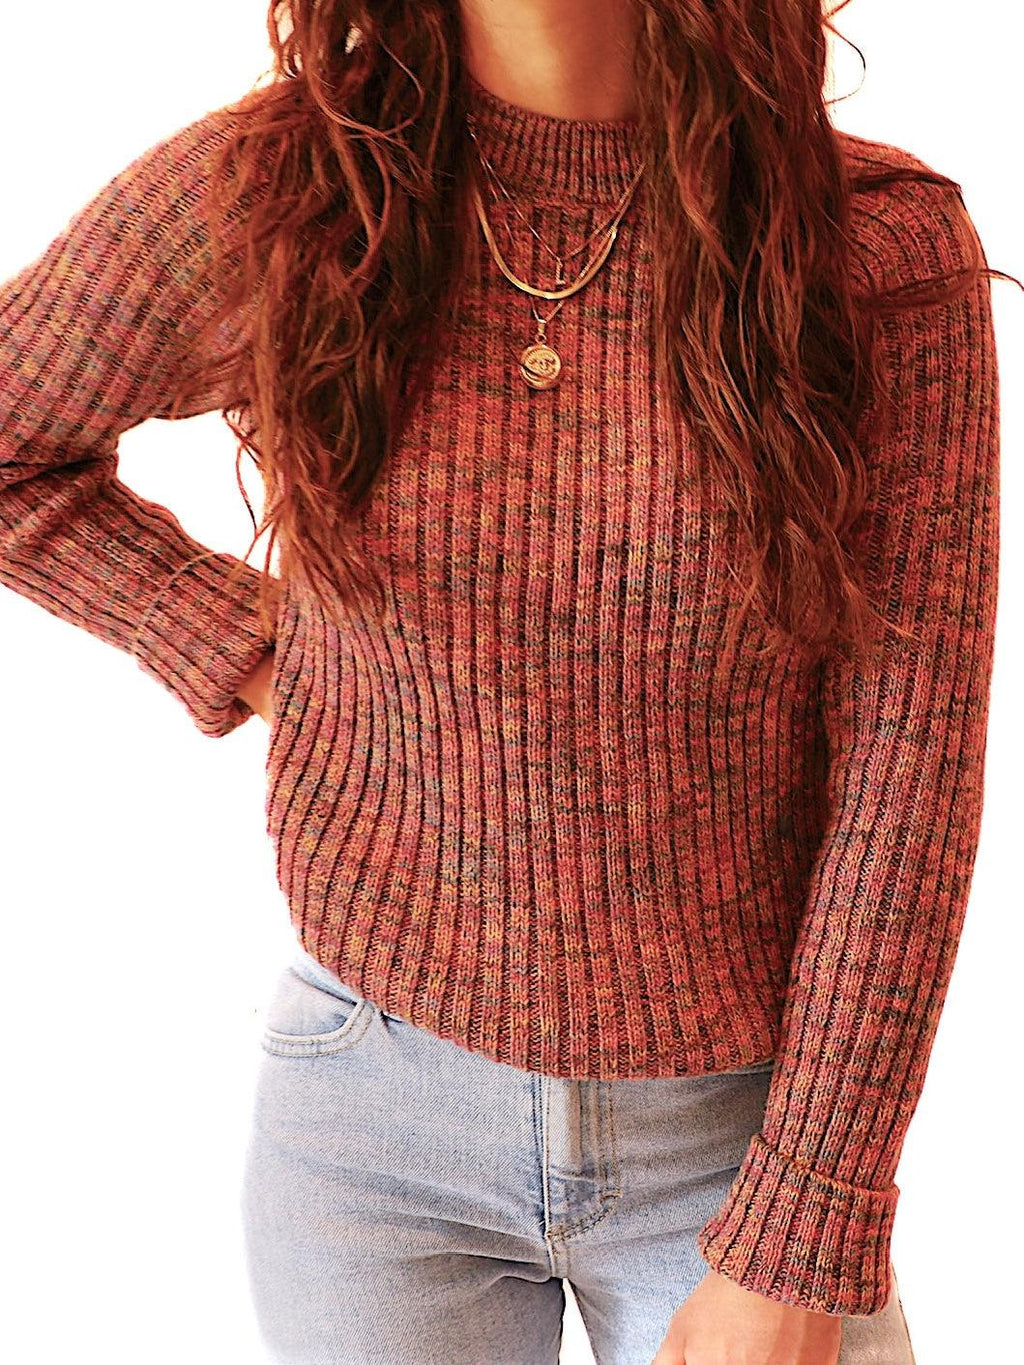 Iconic Edge Sweater - Alden+Rose LLC 